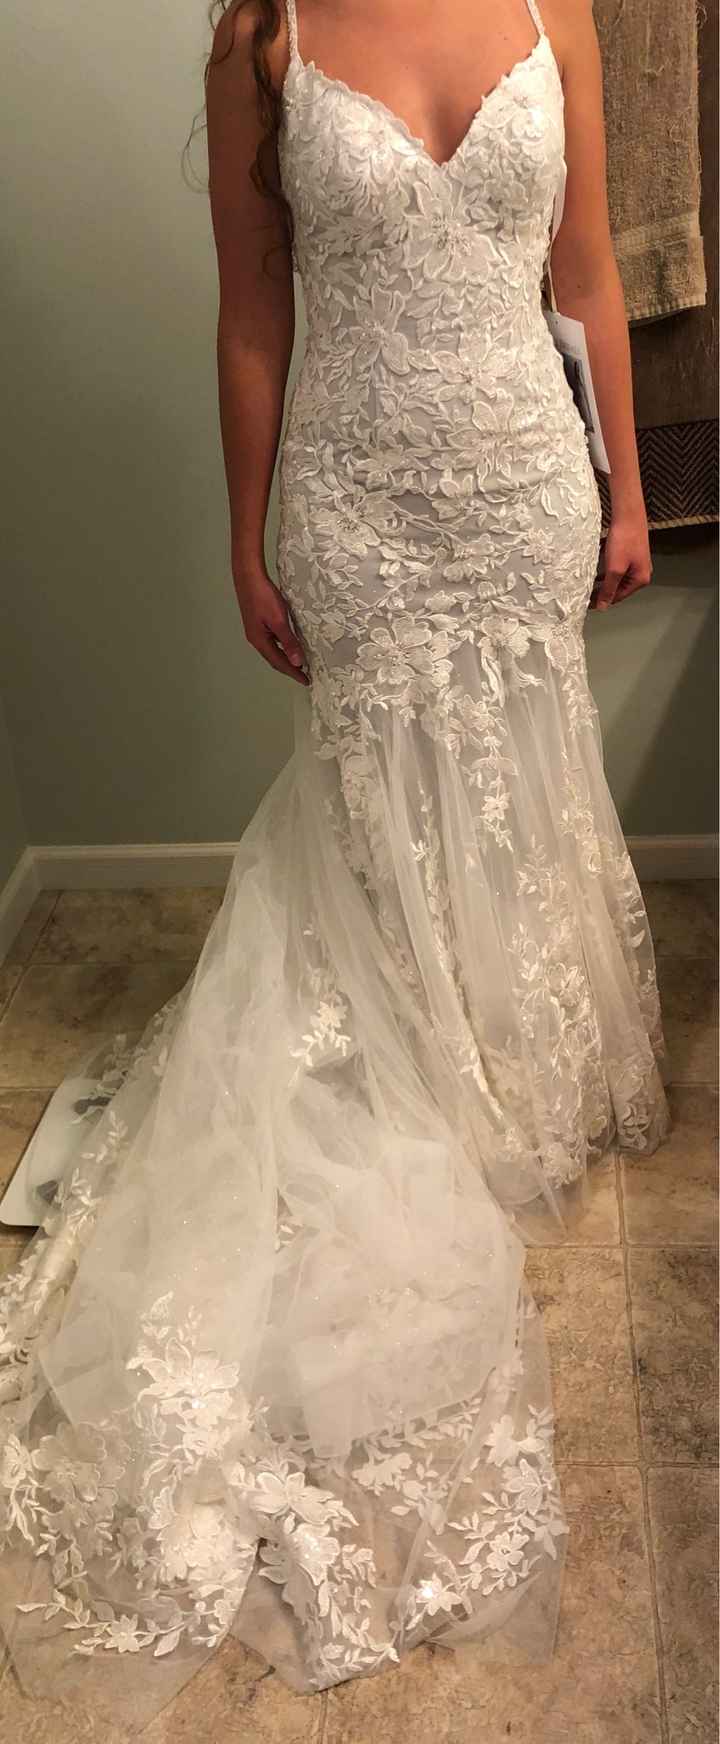 Wedding Dress too tight - 1